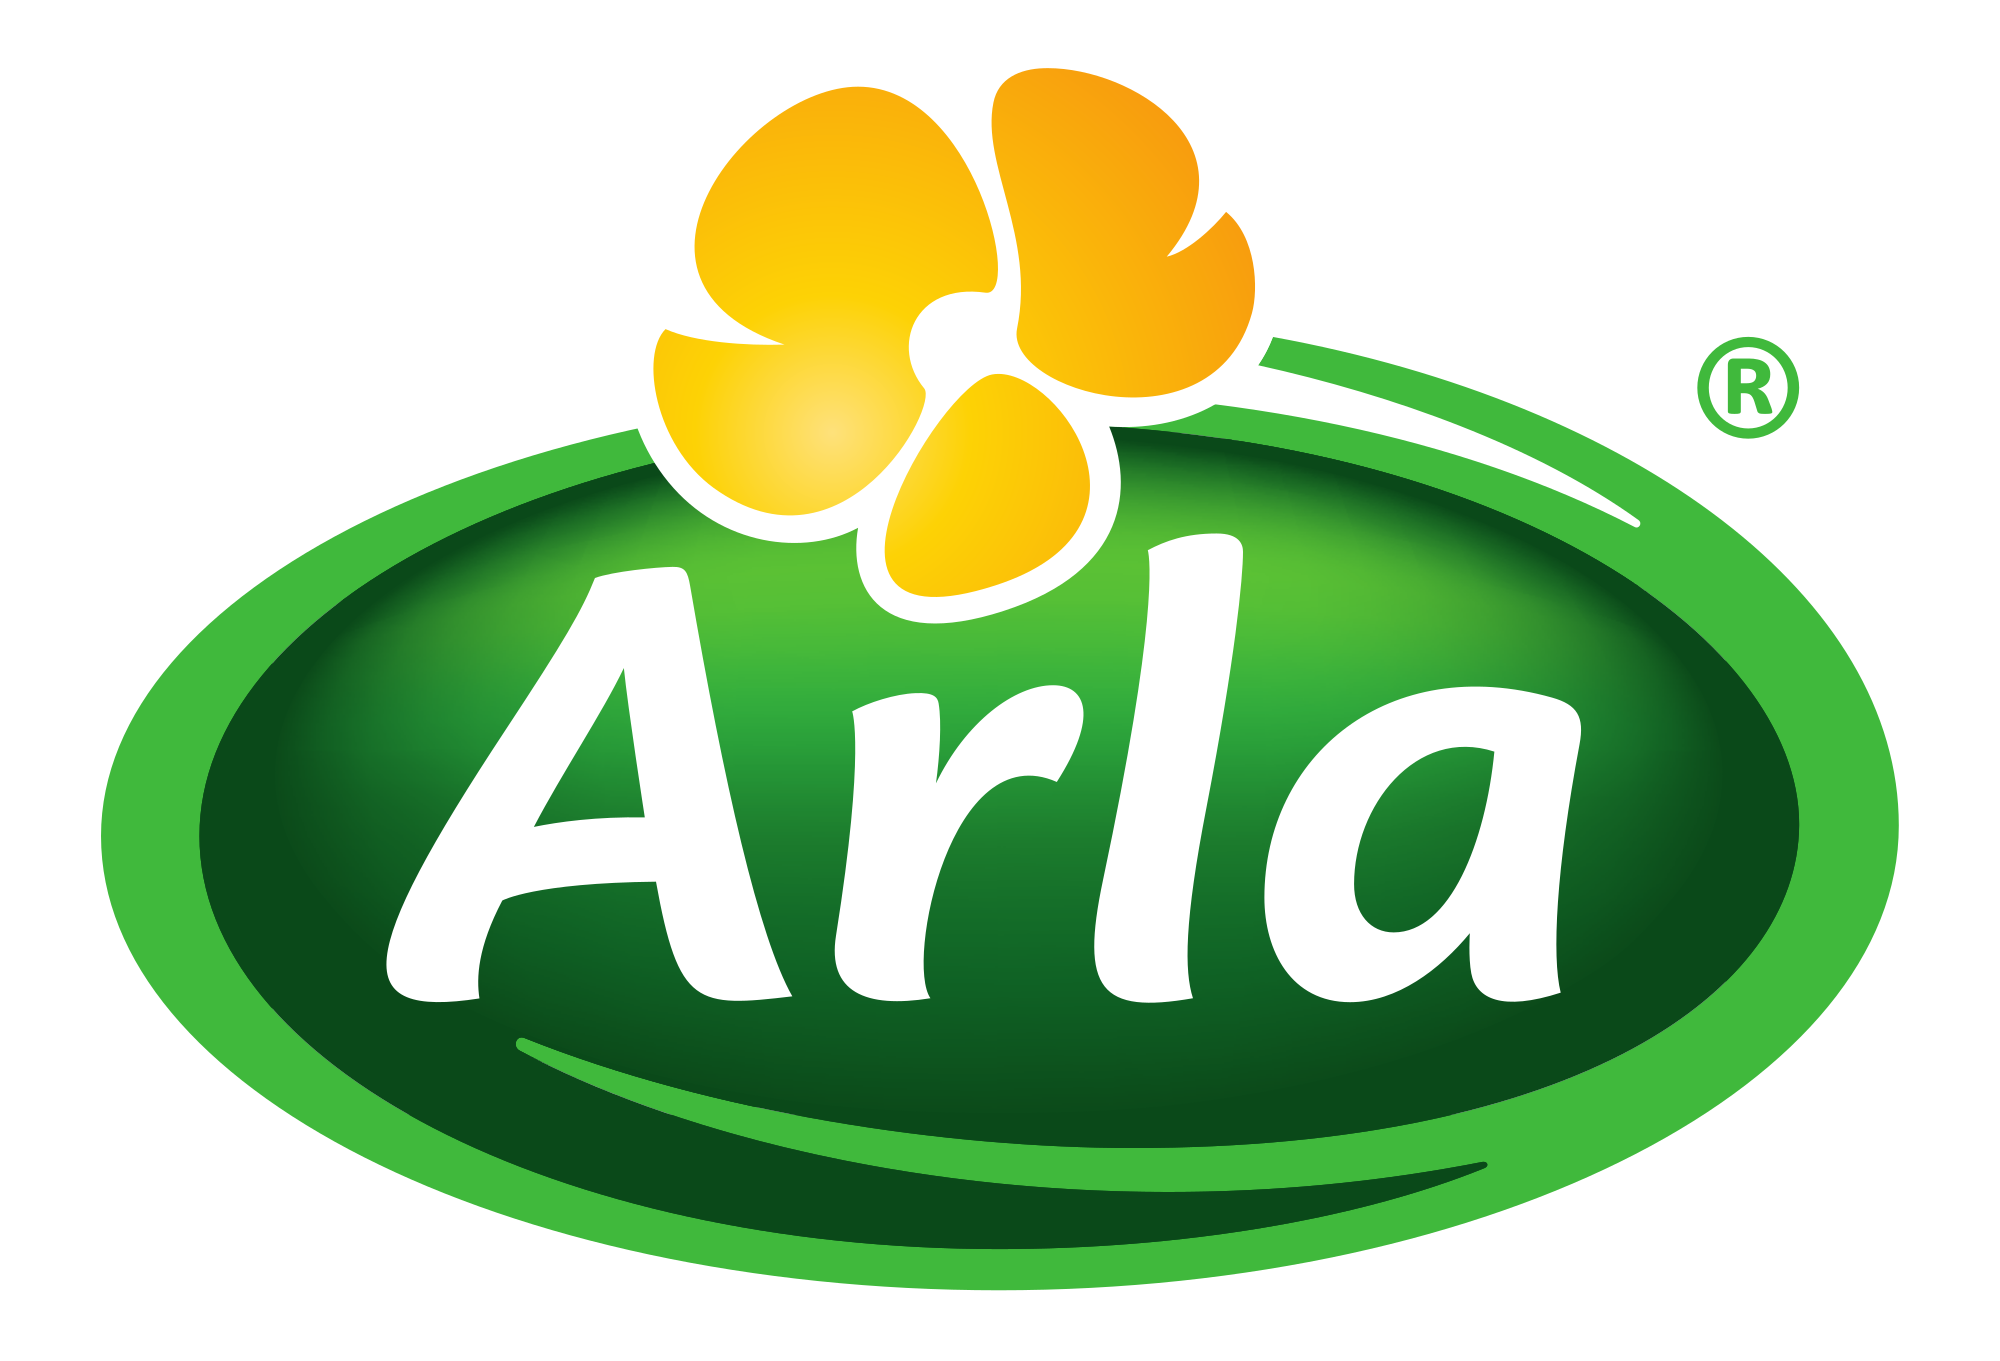 Arla Foods Deutschland GmbH